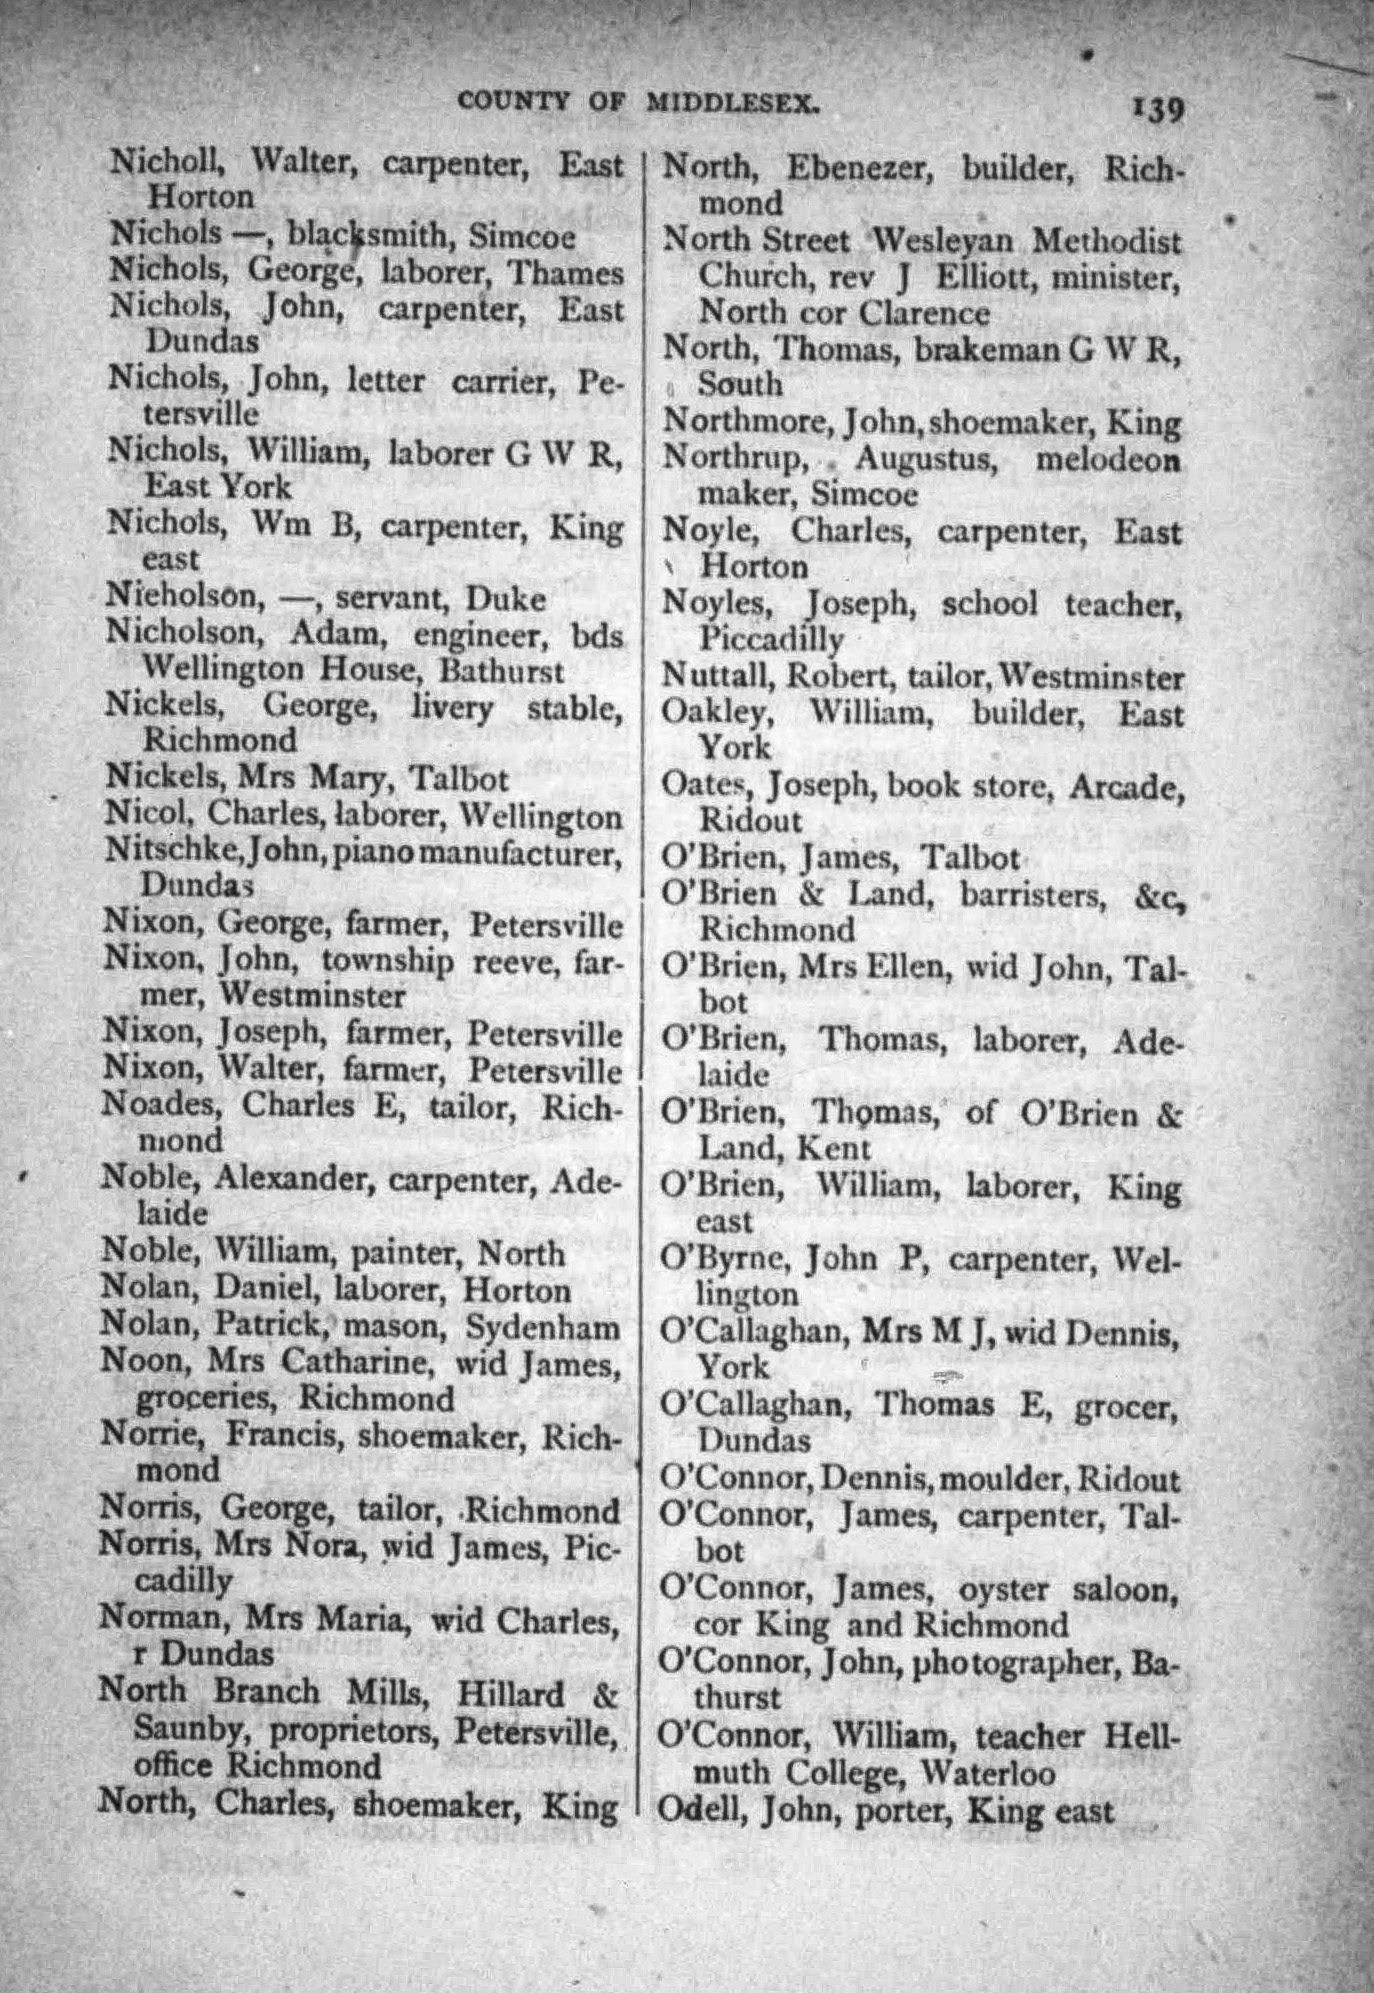 1871 London Ont Directory for Nichols